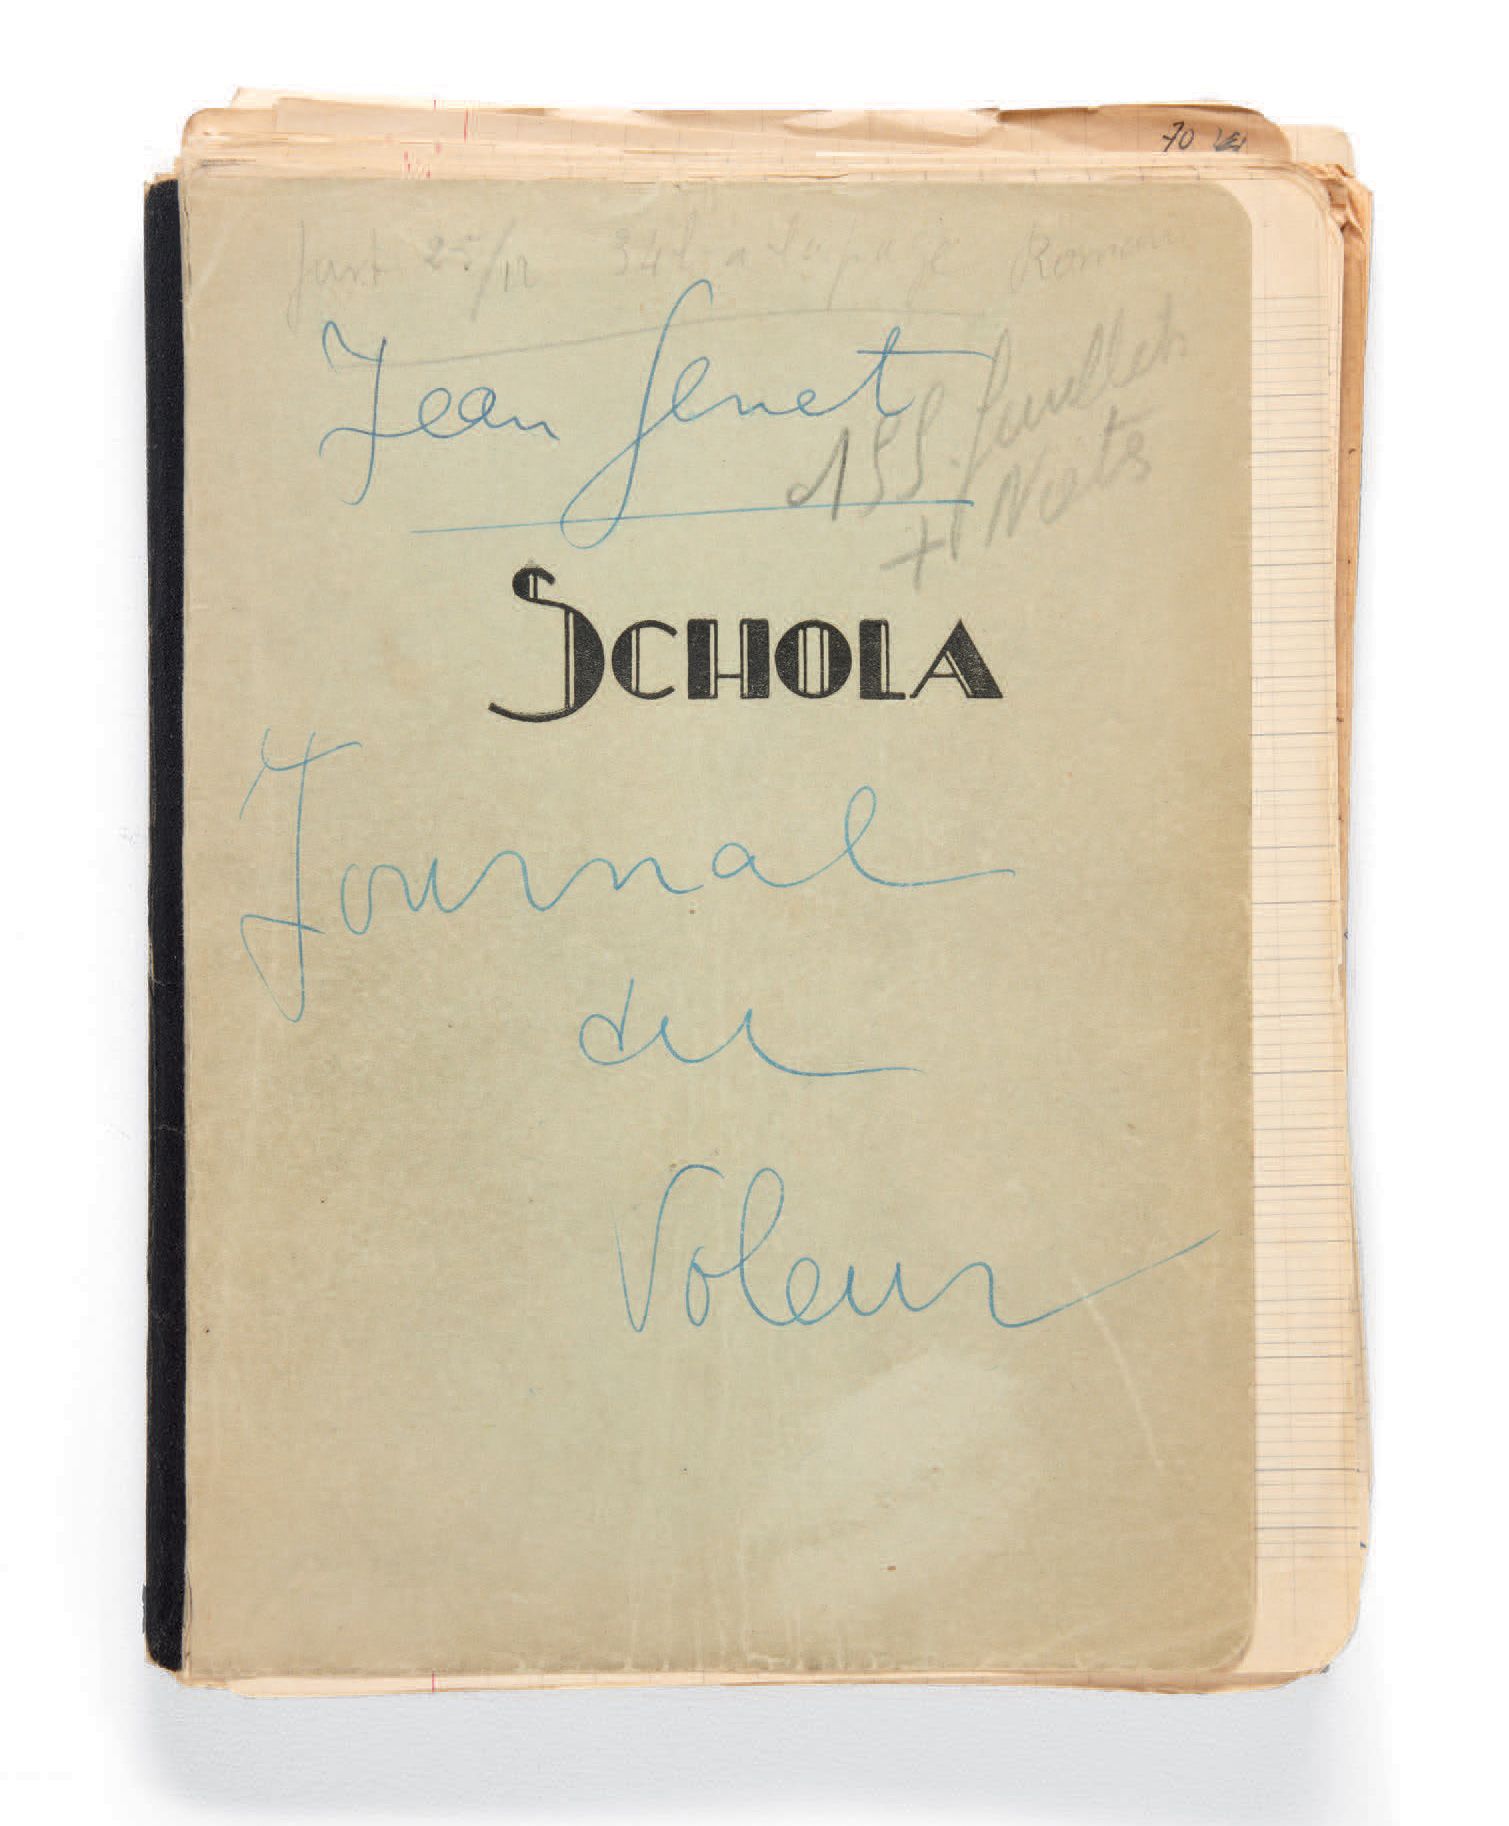 GENET, Jean. Le Journal du voleur. Octubre de 1947.
Manuscrito autógrafo firmado&hellip;